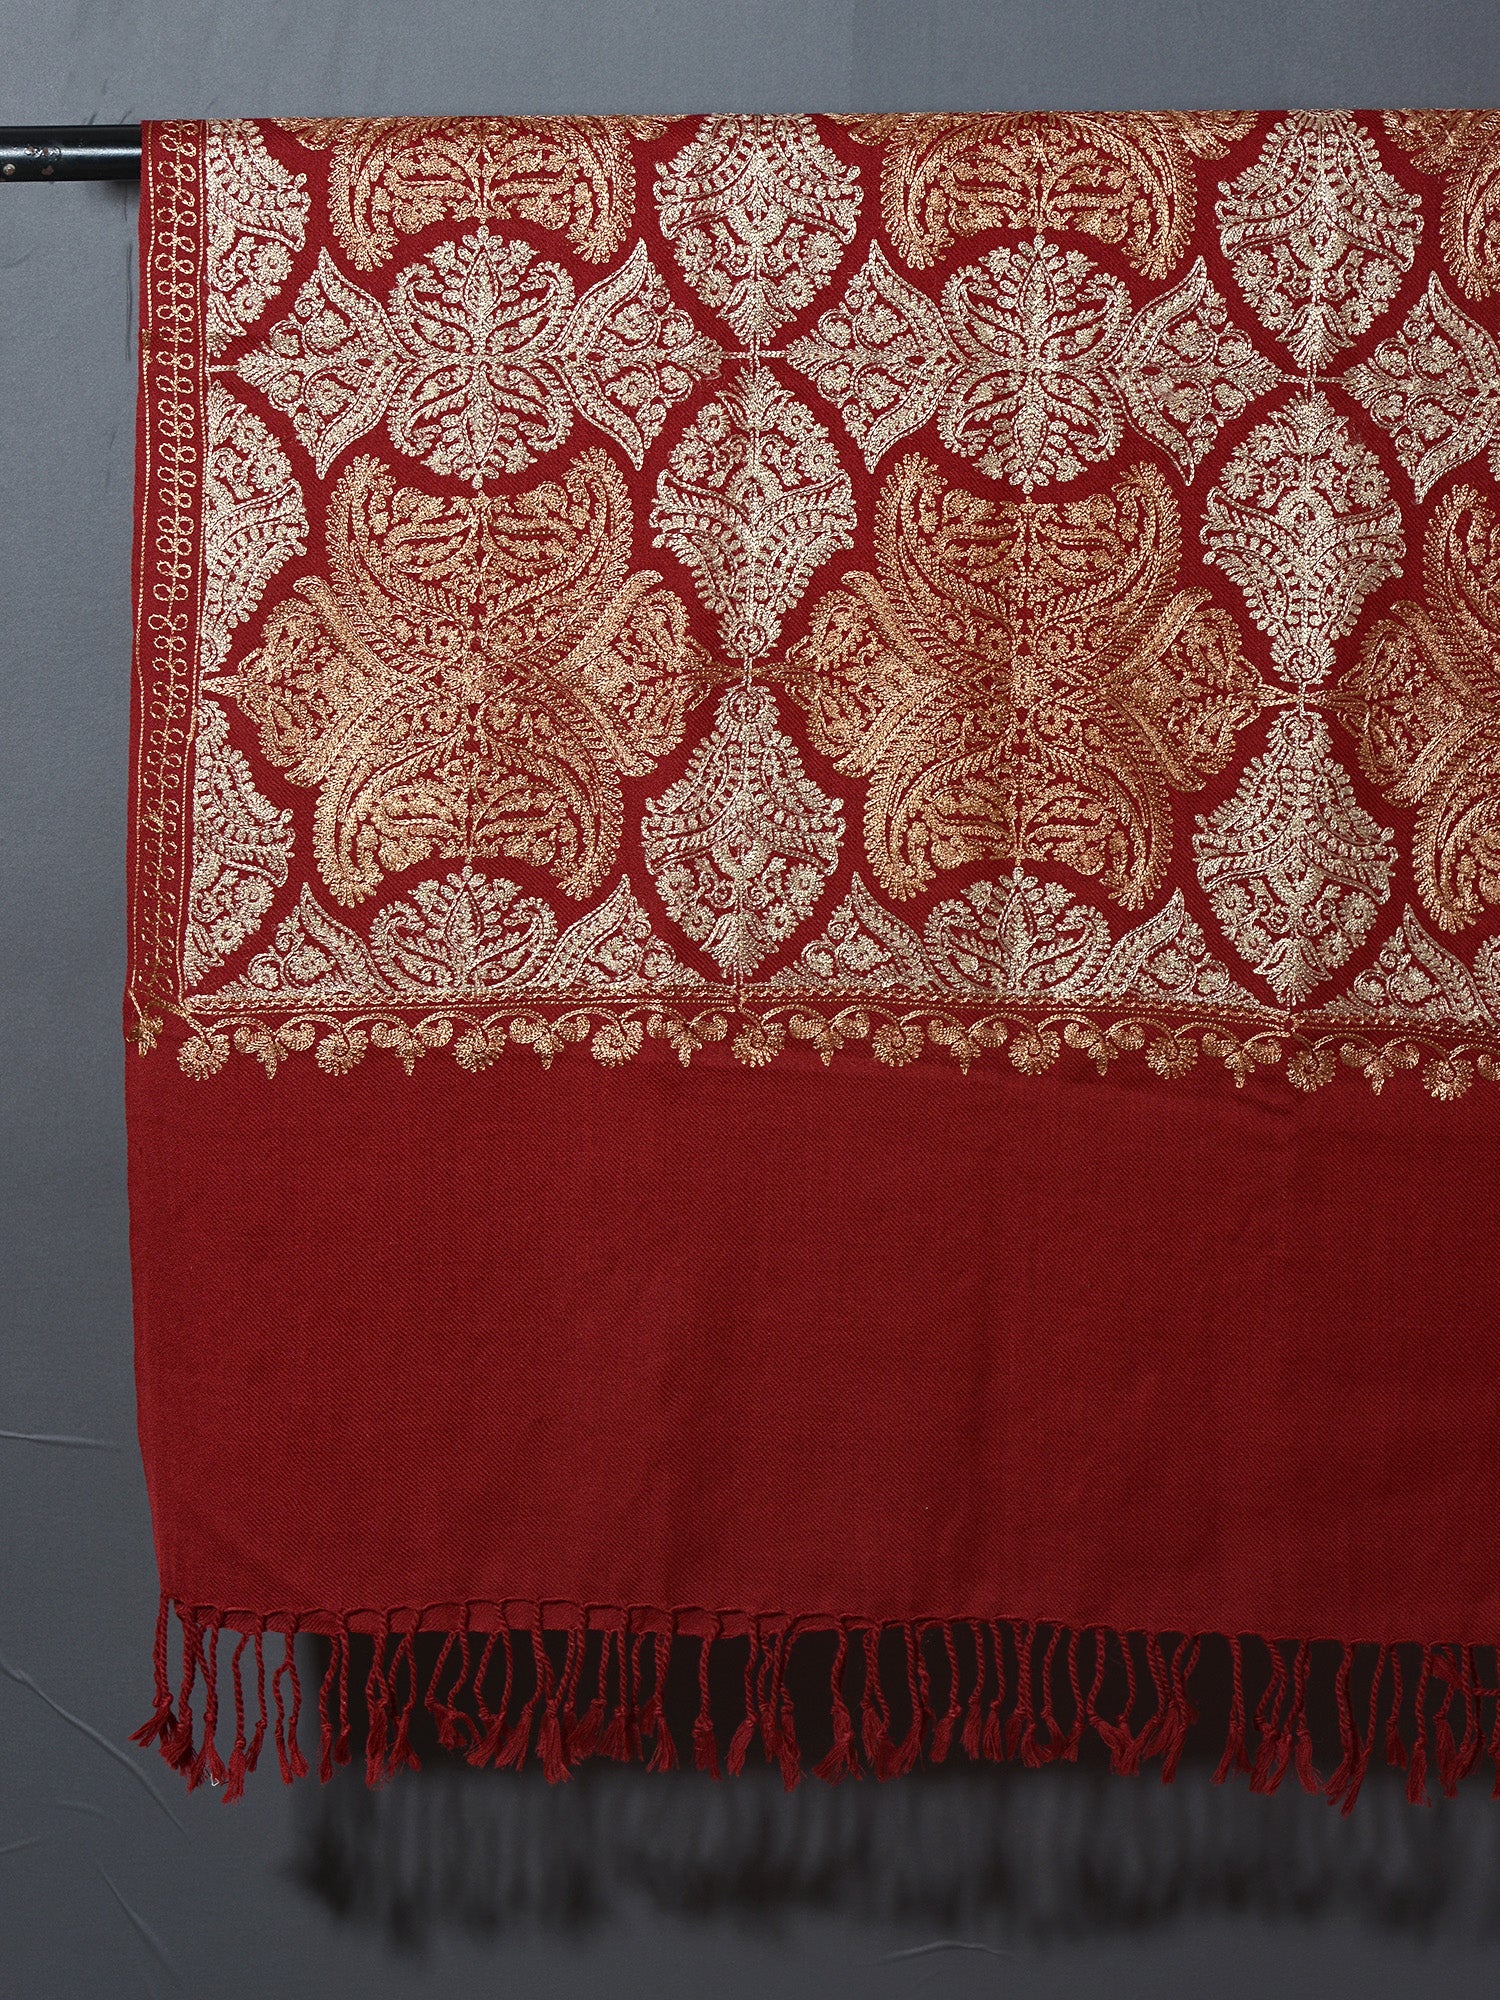 RAVEE Elegant Crimson Red  Embroidered Shawl - Unisex